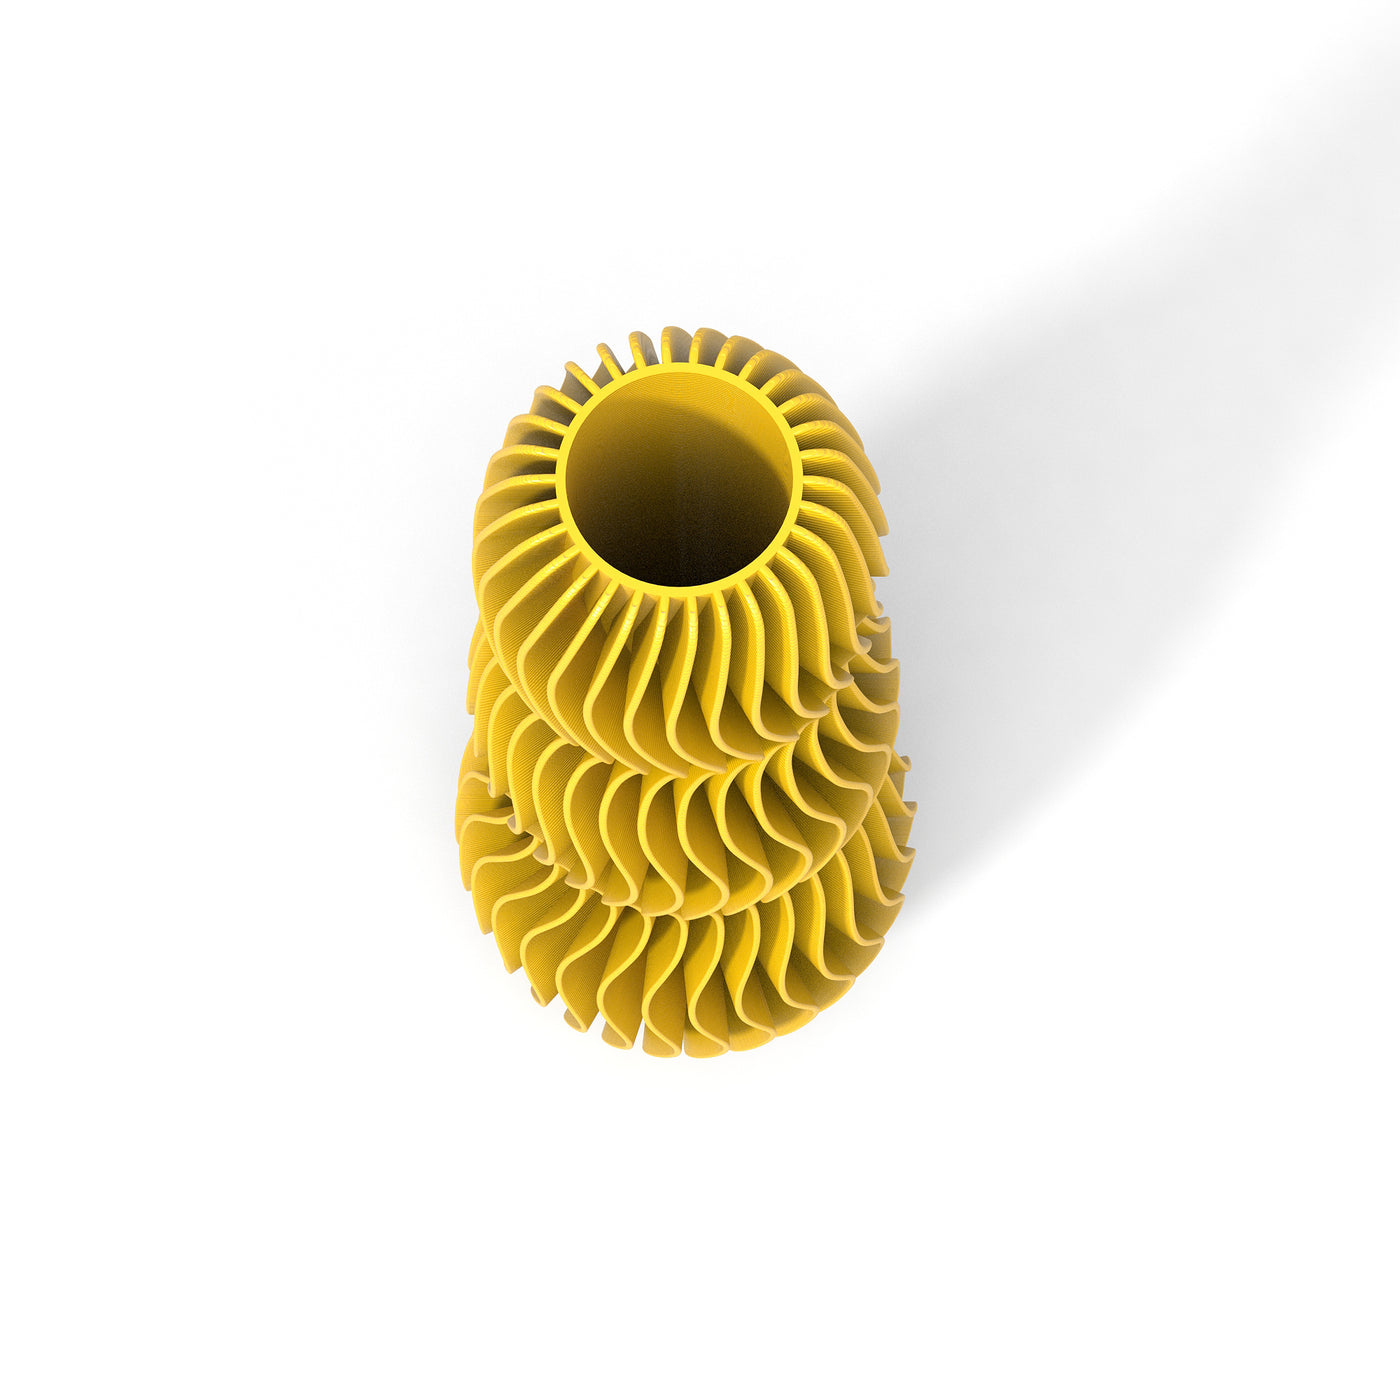 Žlutá designová váza 3D print WAVE 3 zeshora